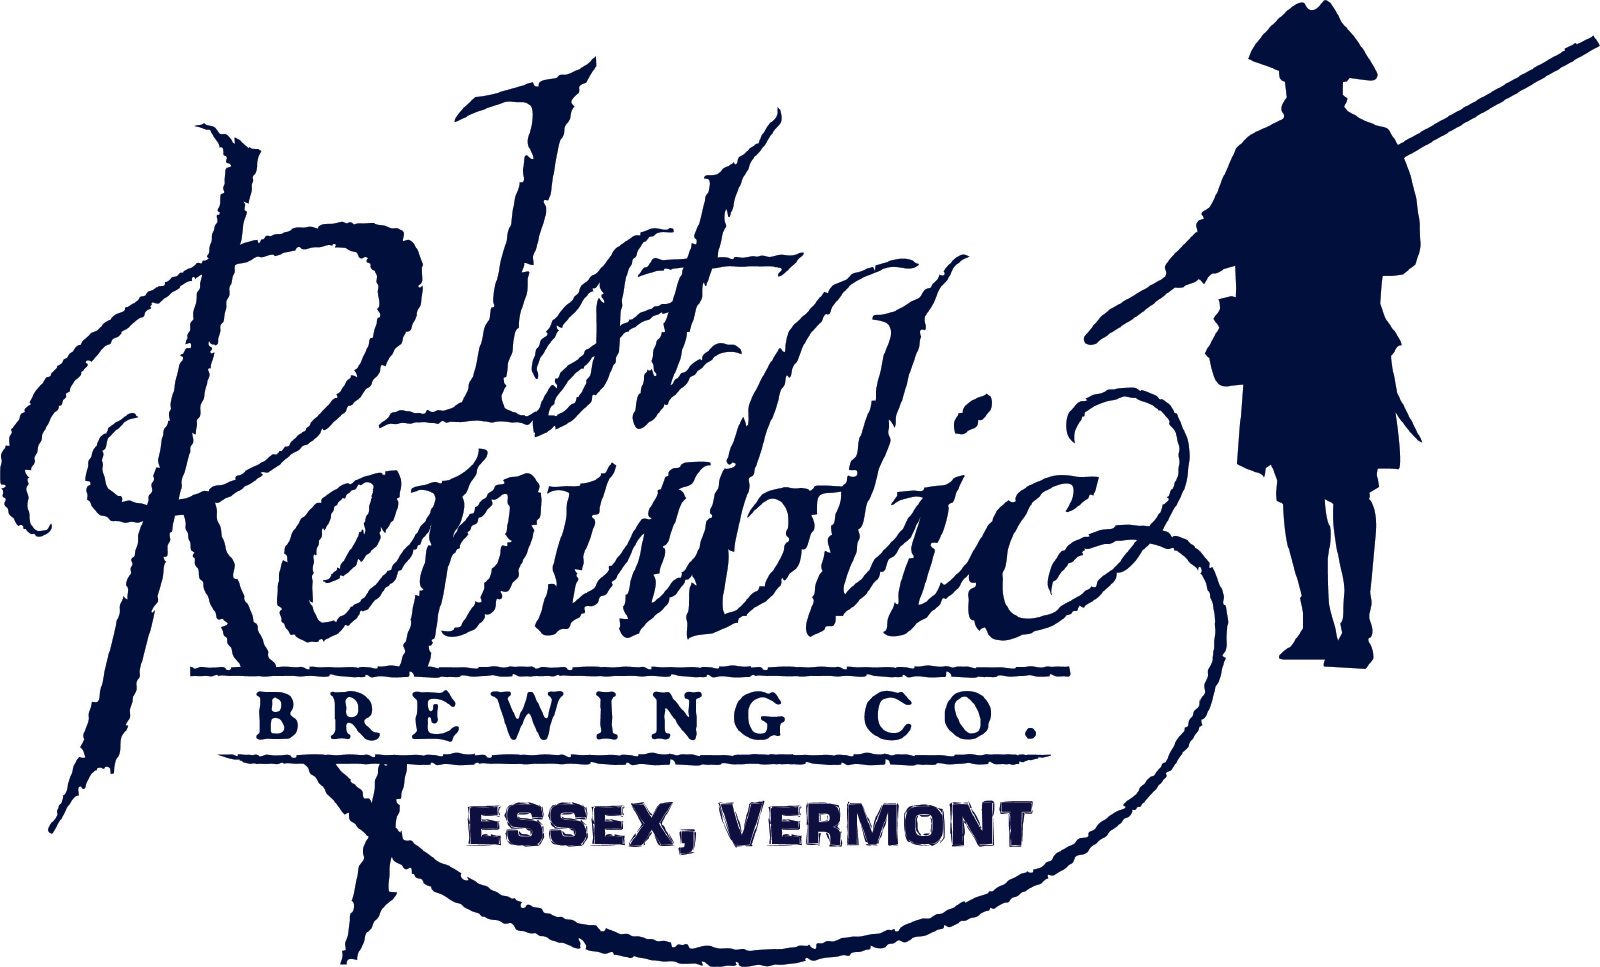 1st Republic Brewing Co's logo